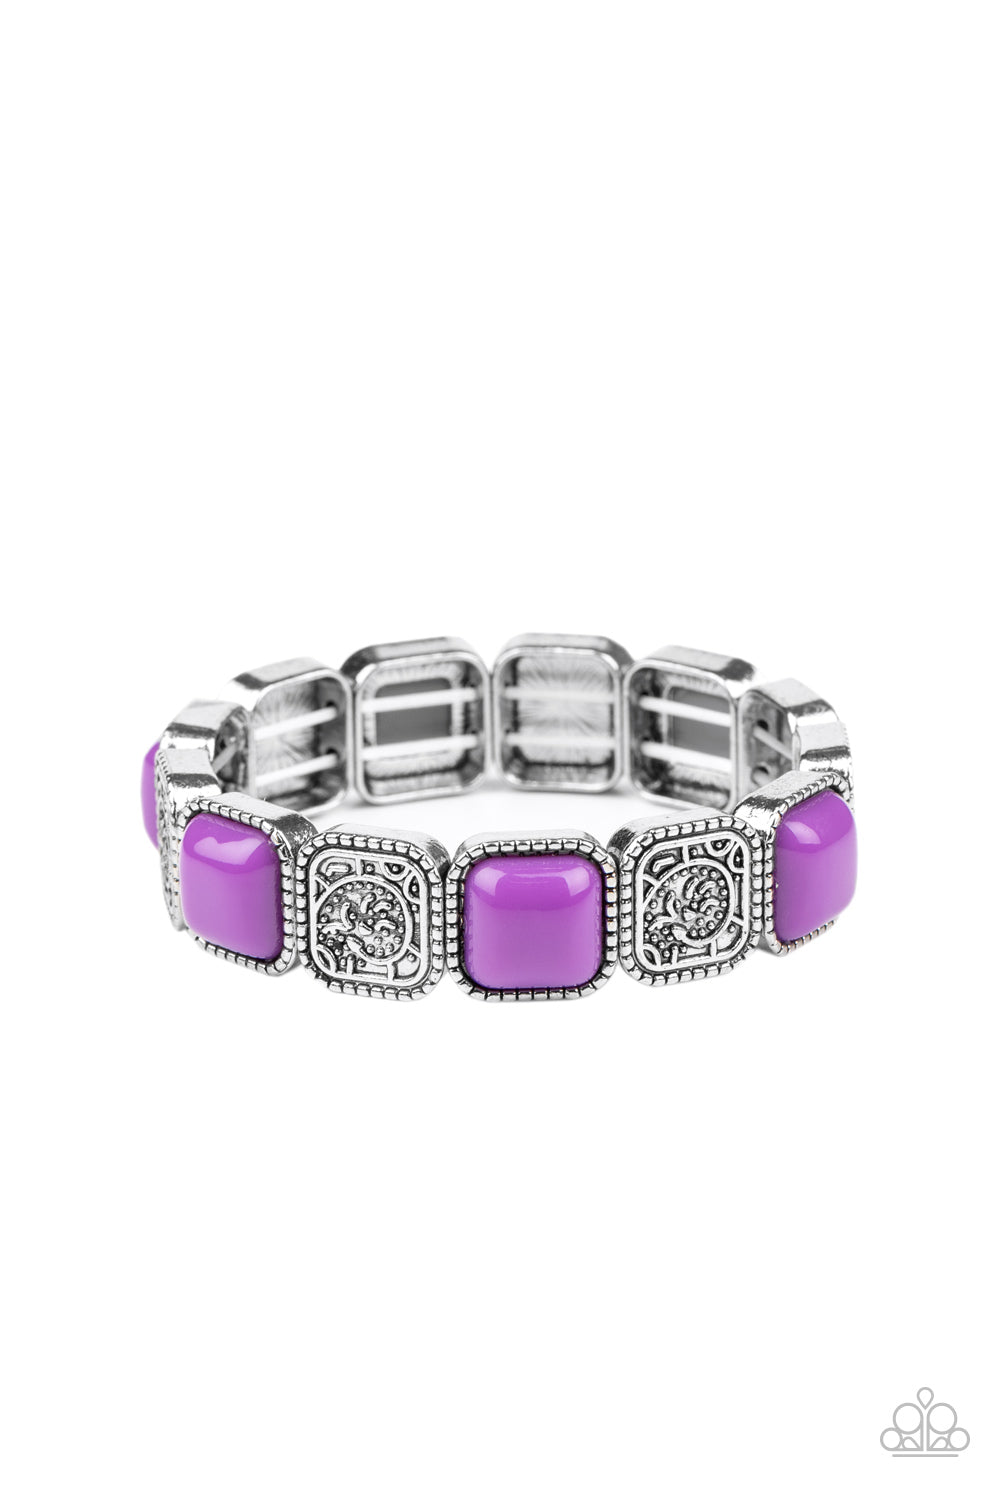 five-dollar-jewelry-trendy-tease-purple-bracelet-paparazzi-accessories